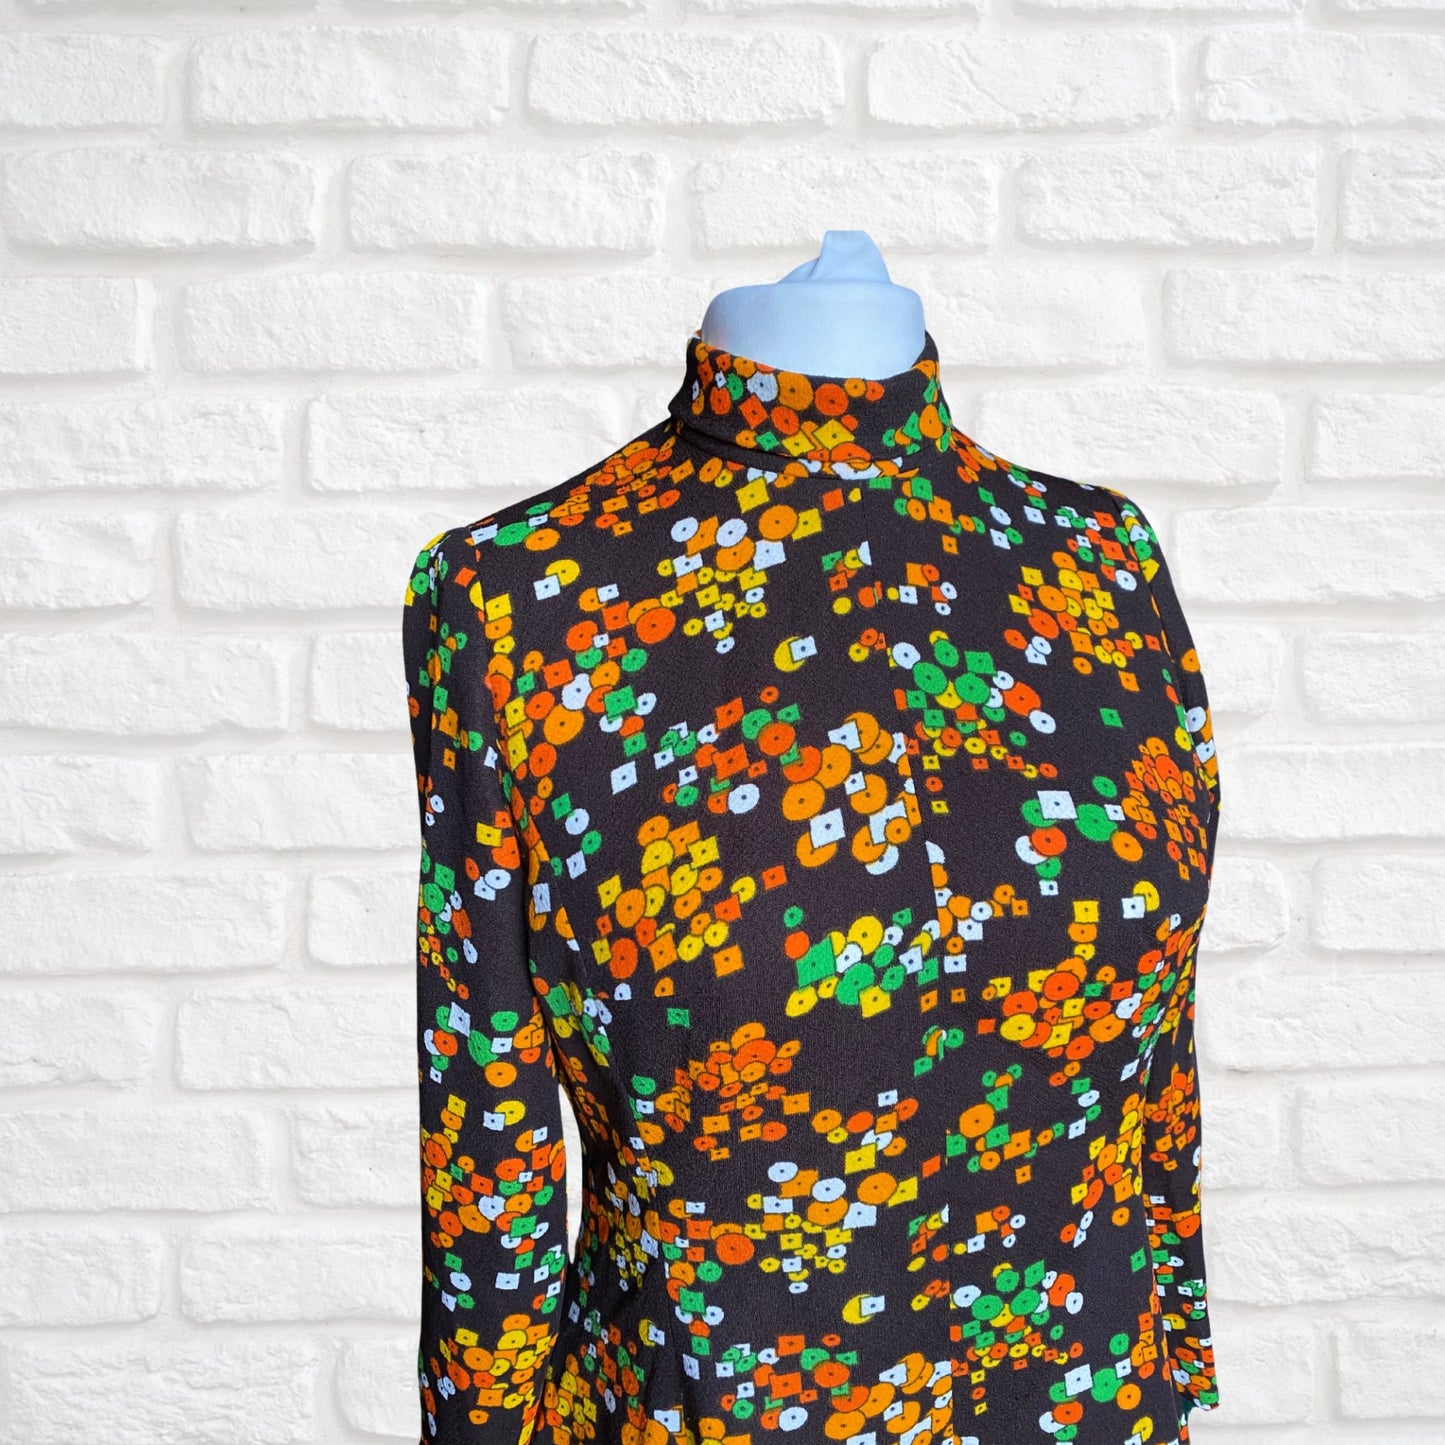 Vintage 60s Geometric Print Long Sleeved Mini Dress. Approx UK size 14-16